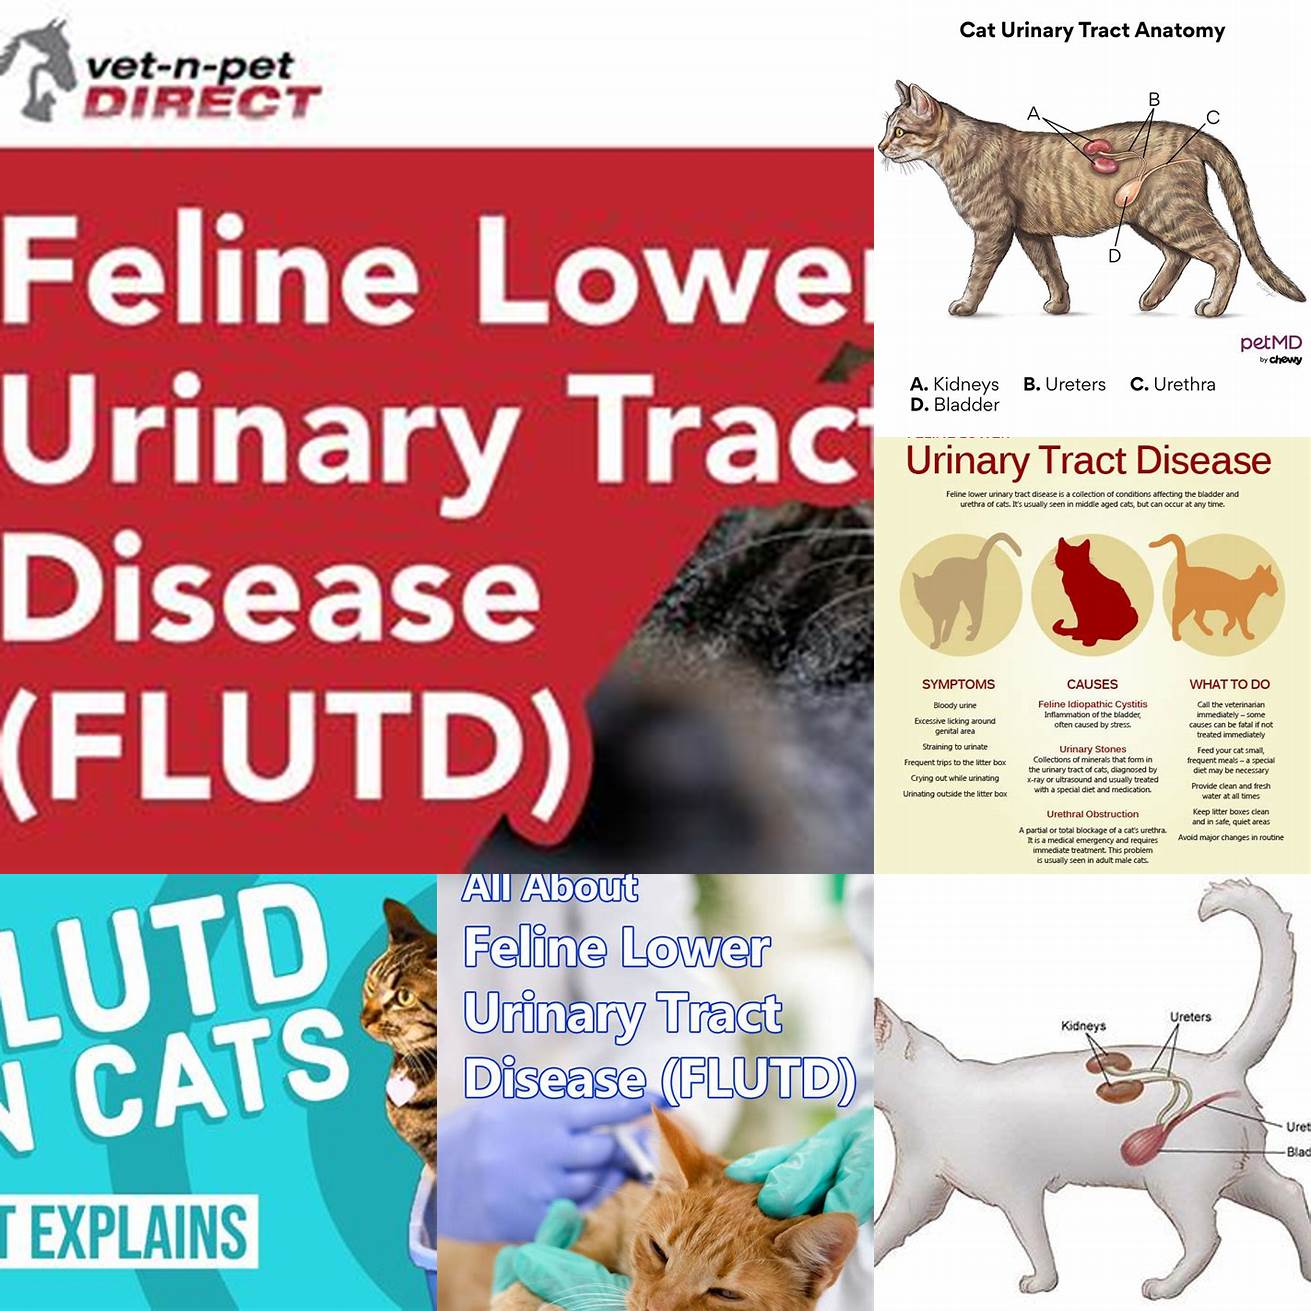 Feline Lower Urinary Tract Disease FLUTD